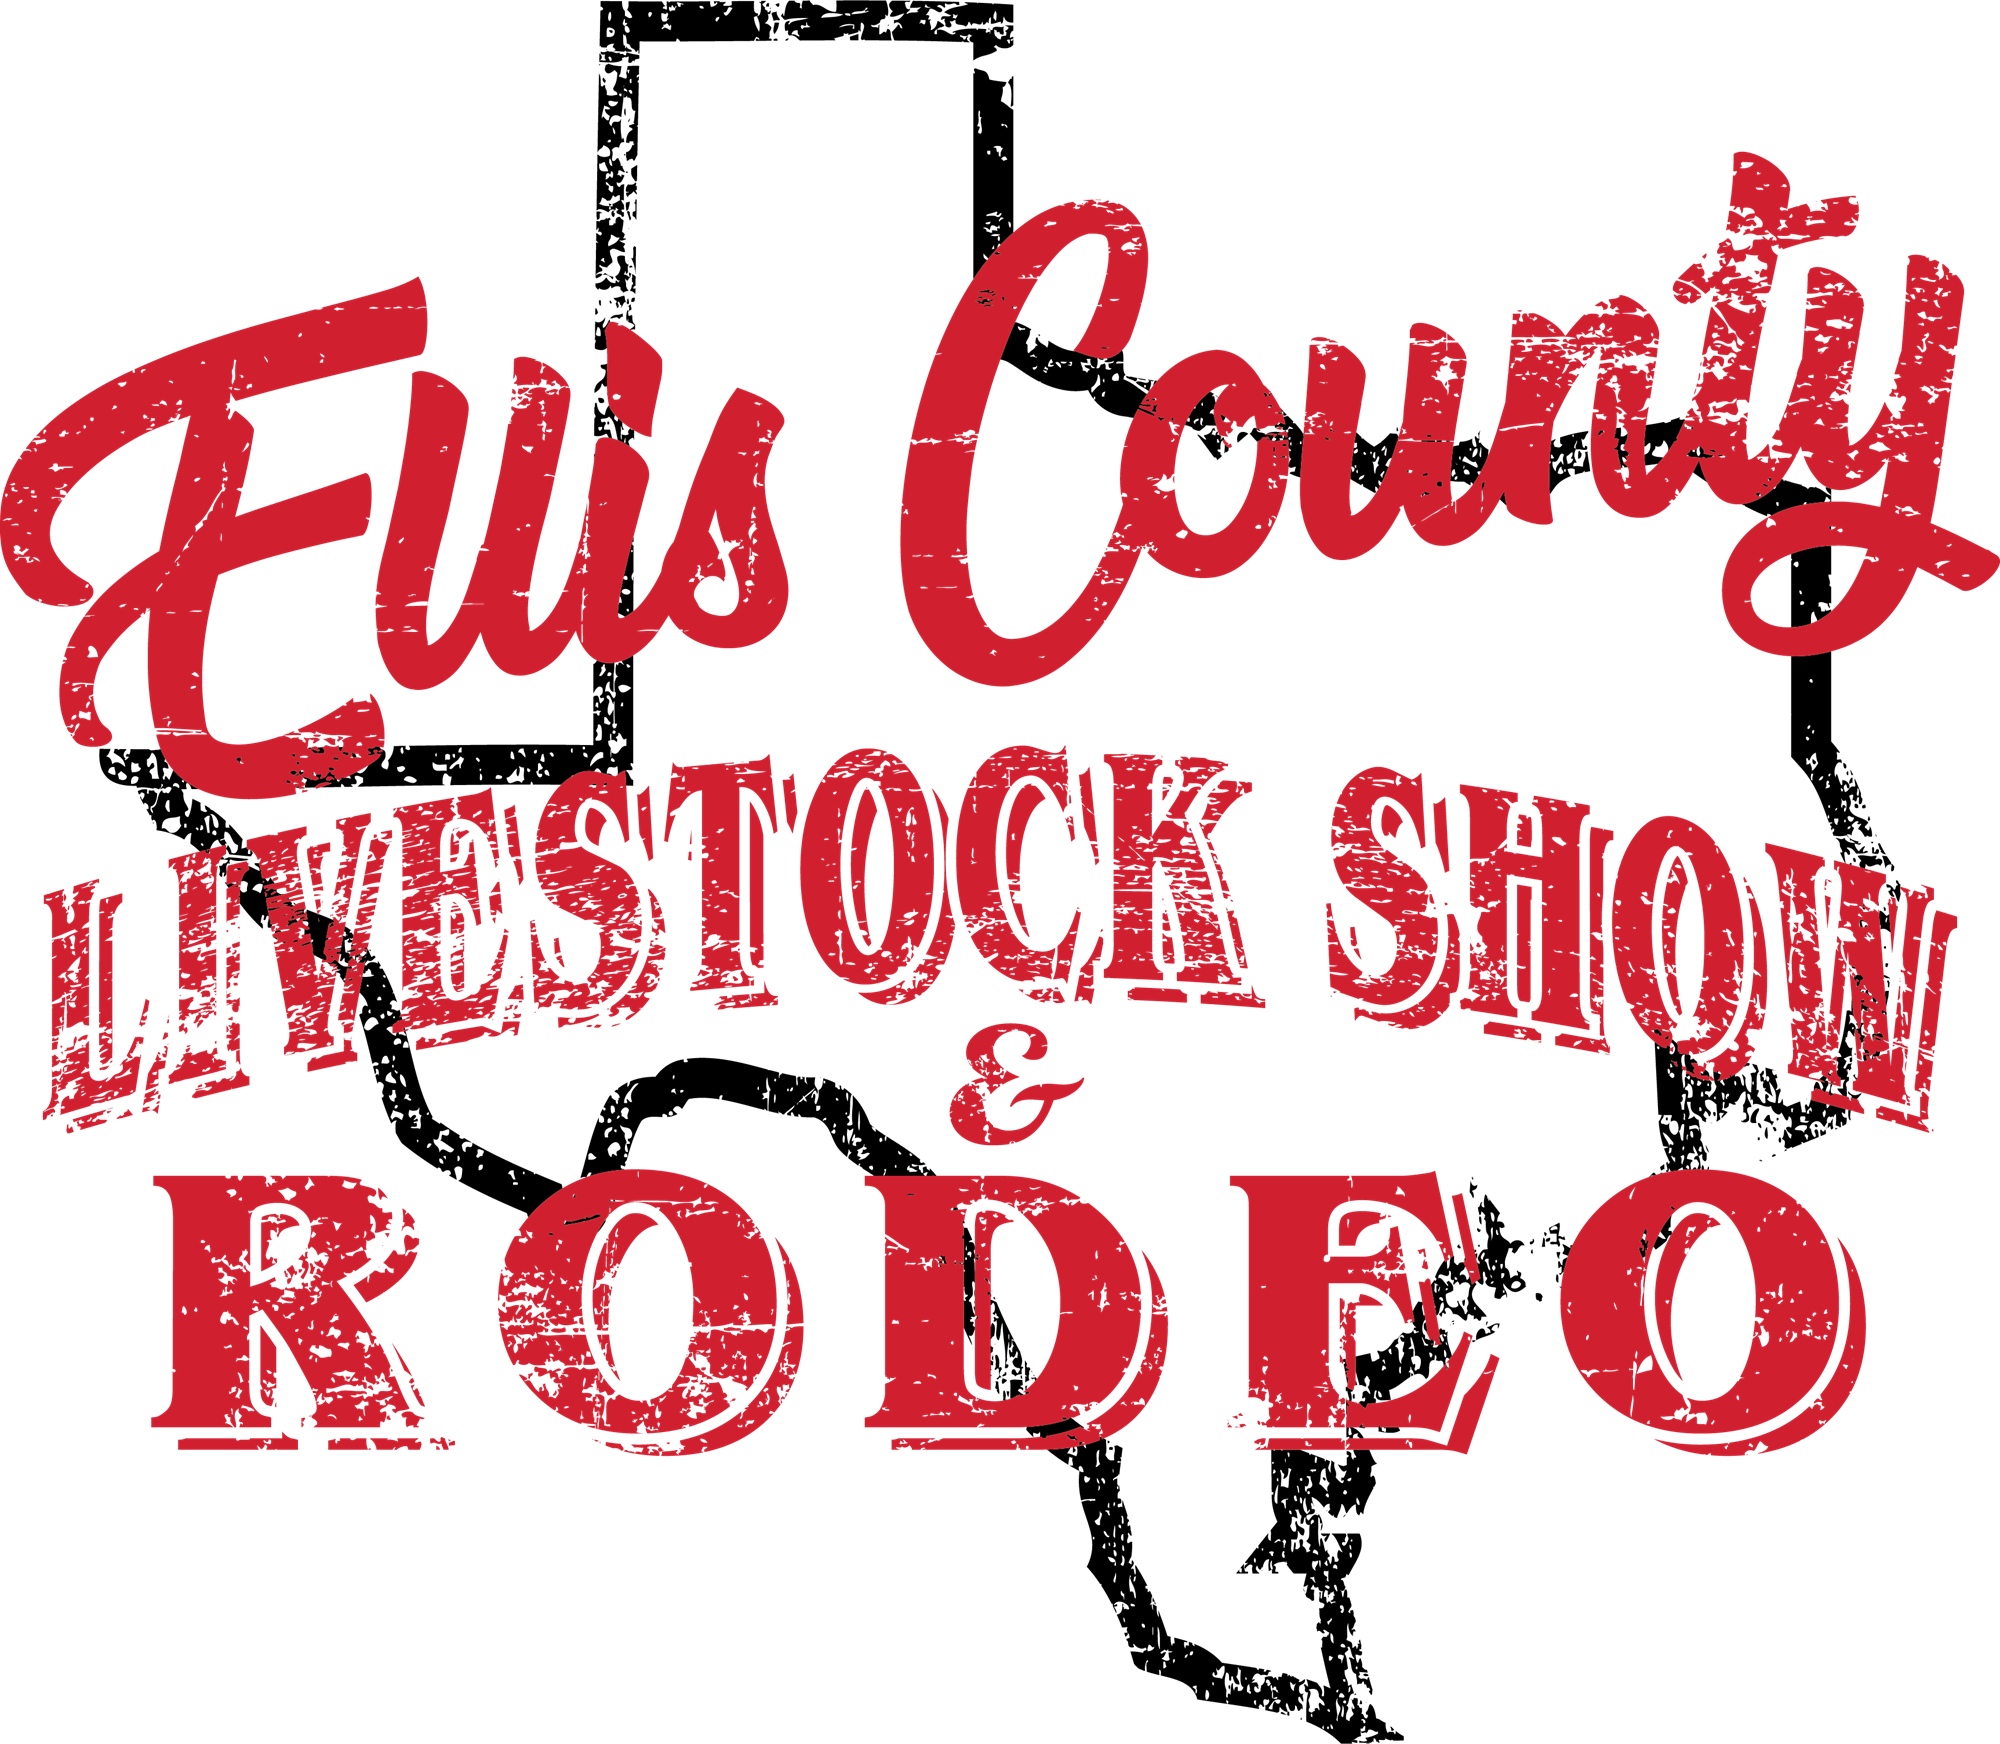 Ellis County Livestock Show